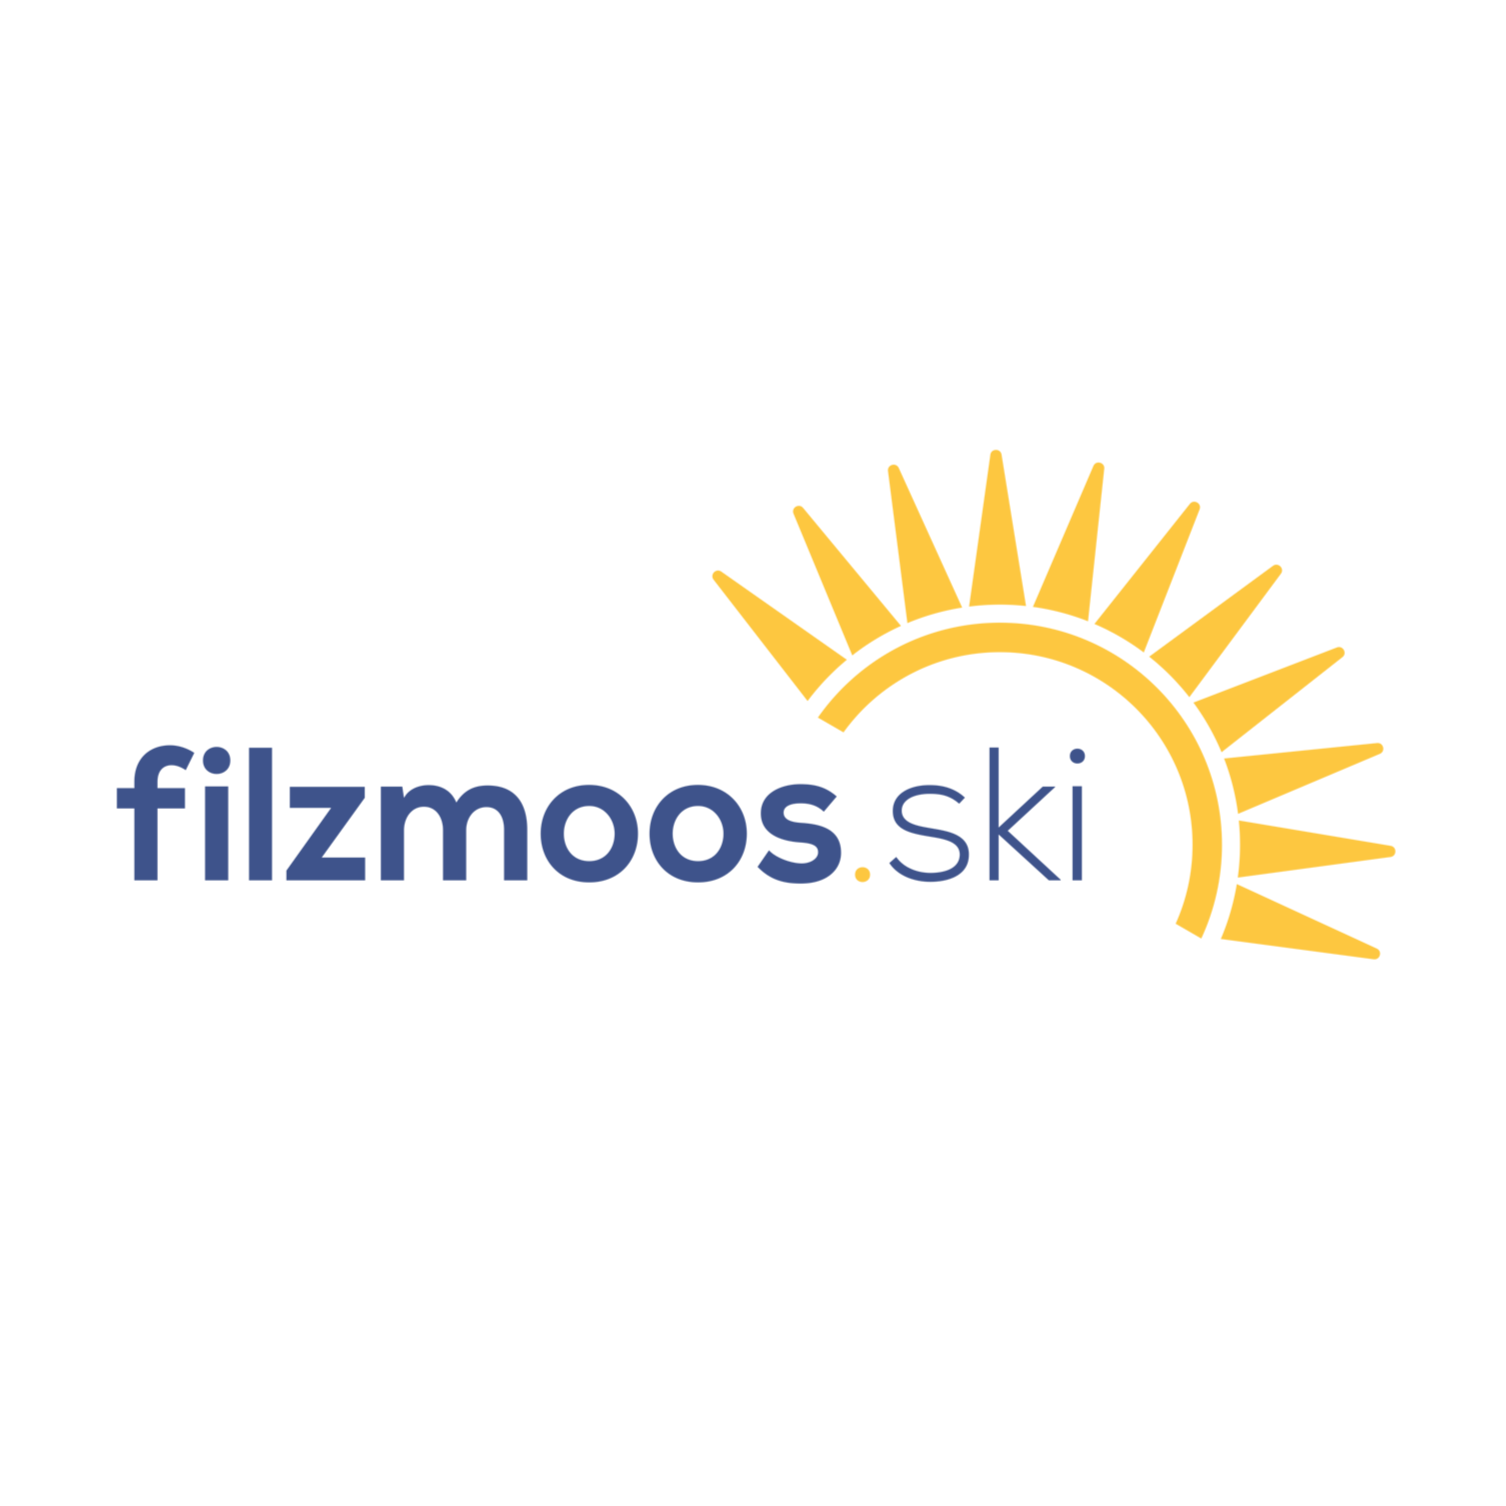 Bergbahnen Filzmoos GmbH -  Skigebiet filzmoos ski - Logo